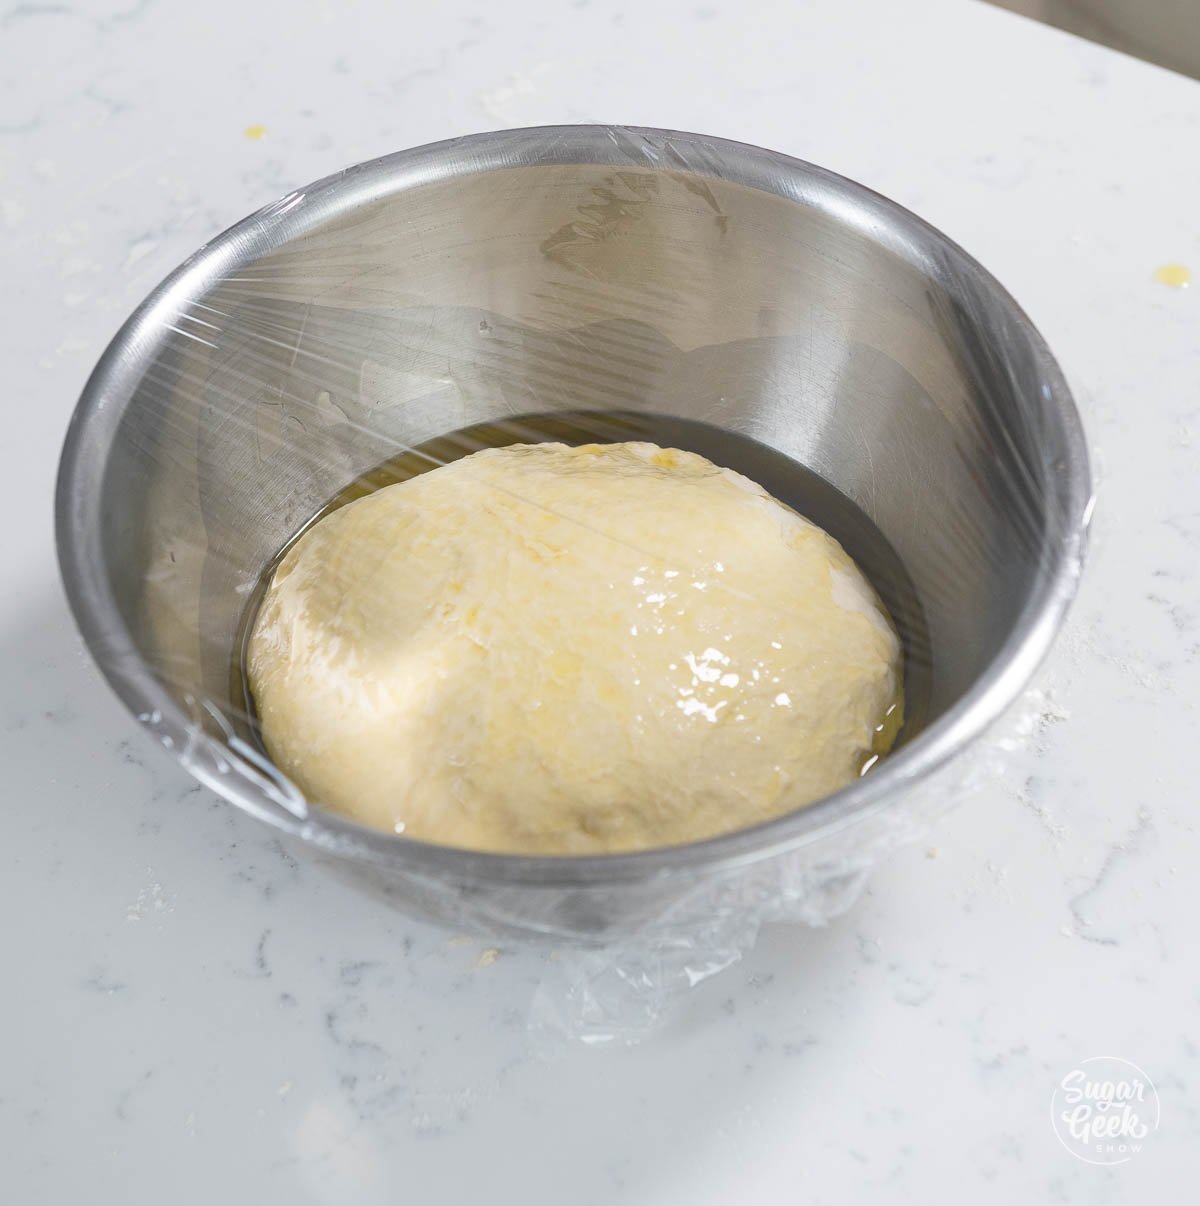 focaccia bread dough in a bowl with olive oil